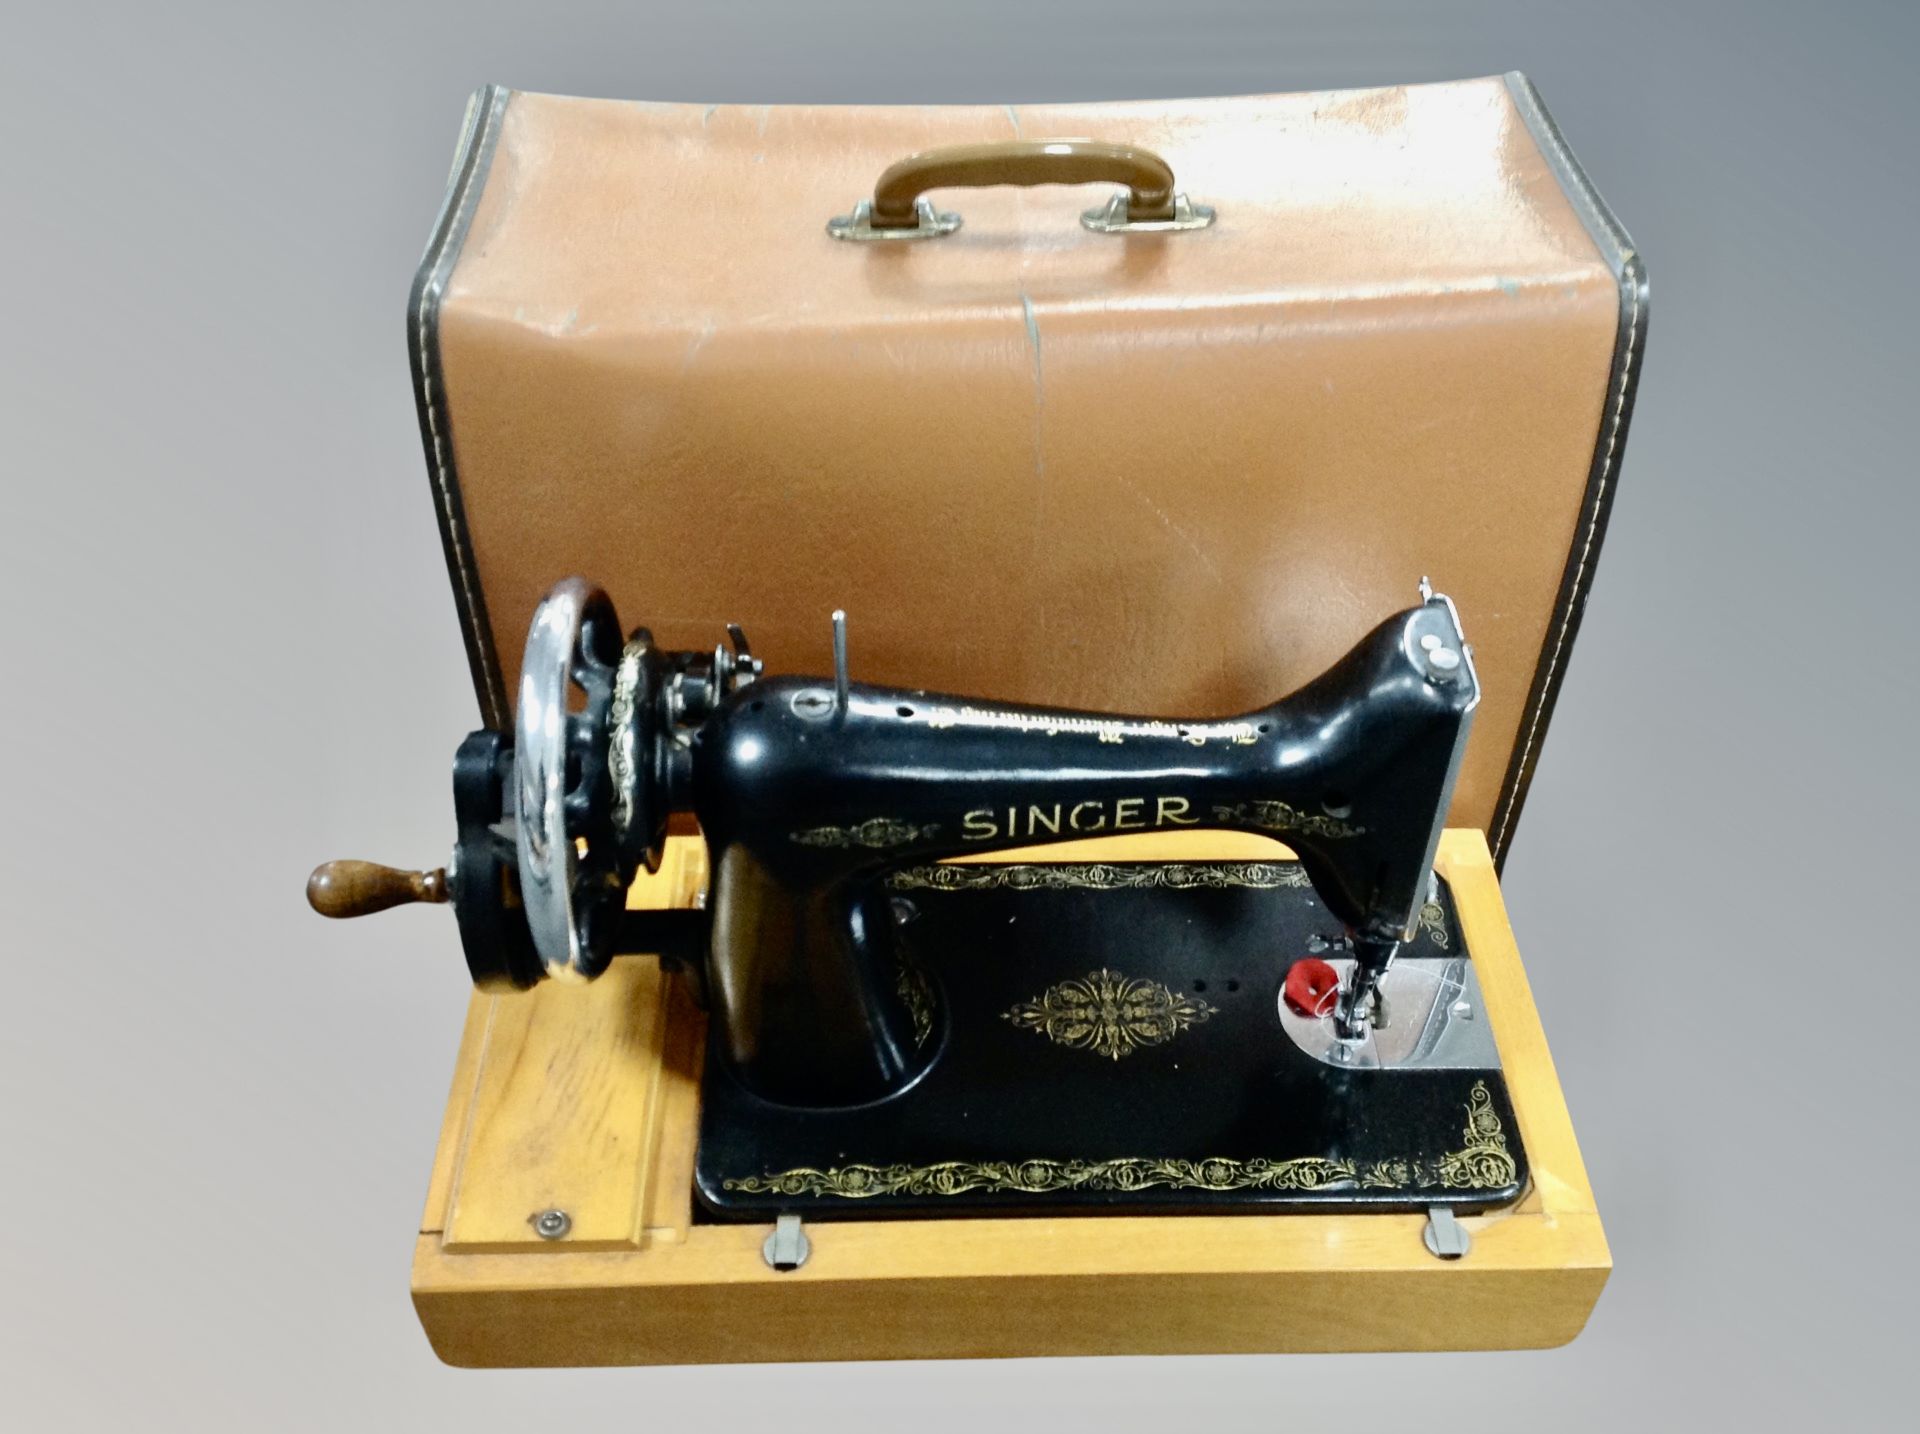 A vintage Singer sewing machine in case